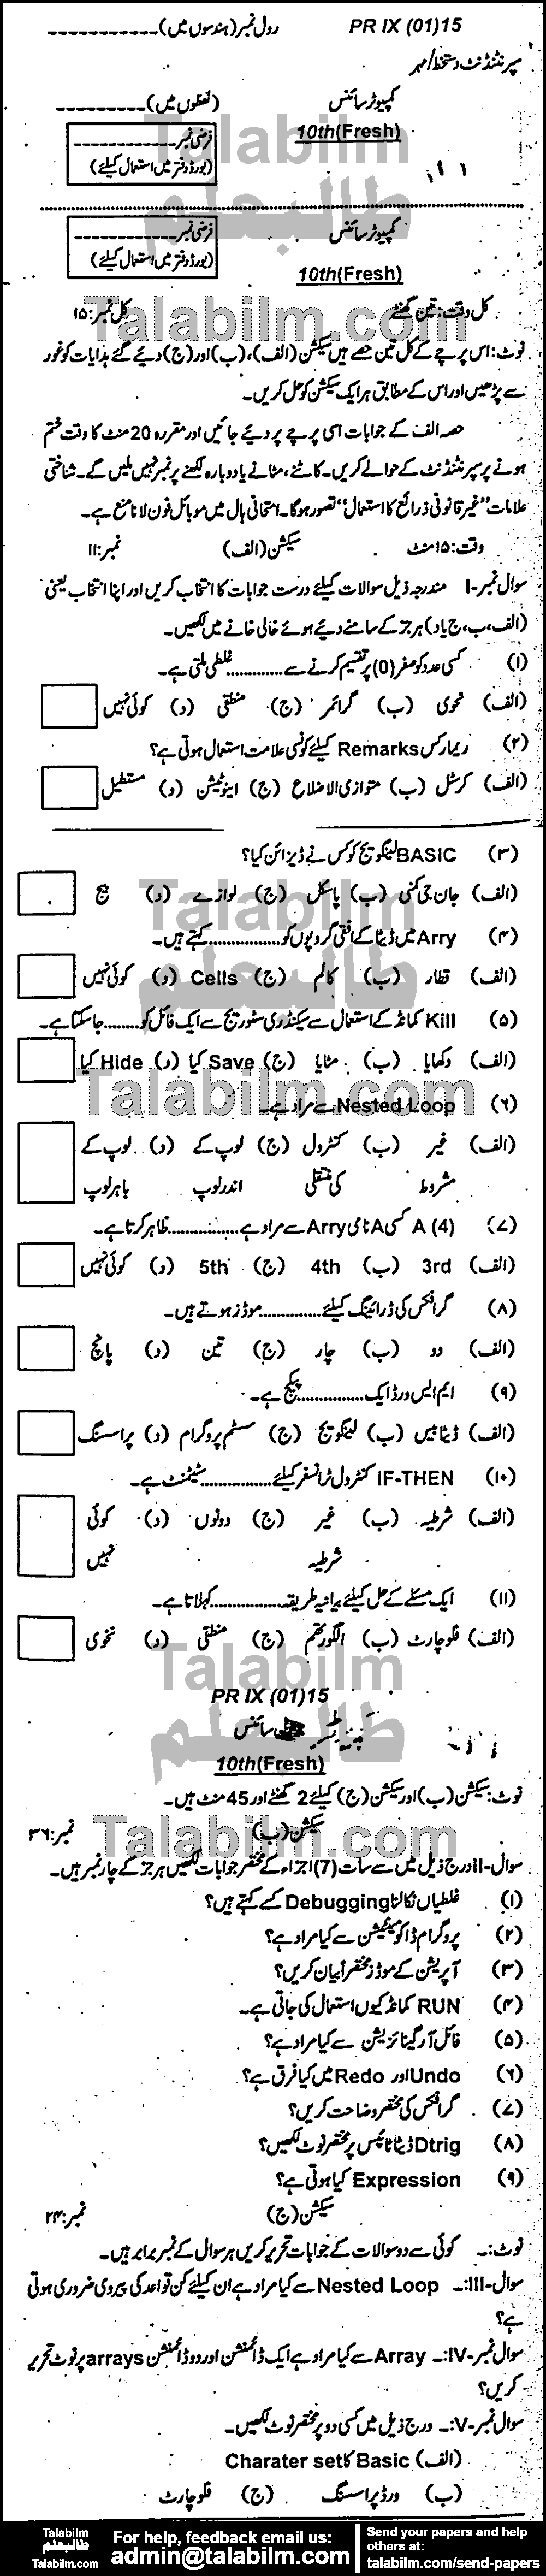 Computer Science 0 past paper for Urdu Medium 2015 Group-I